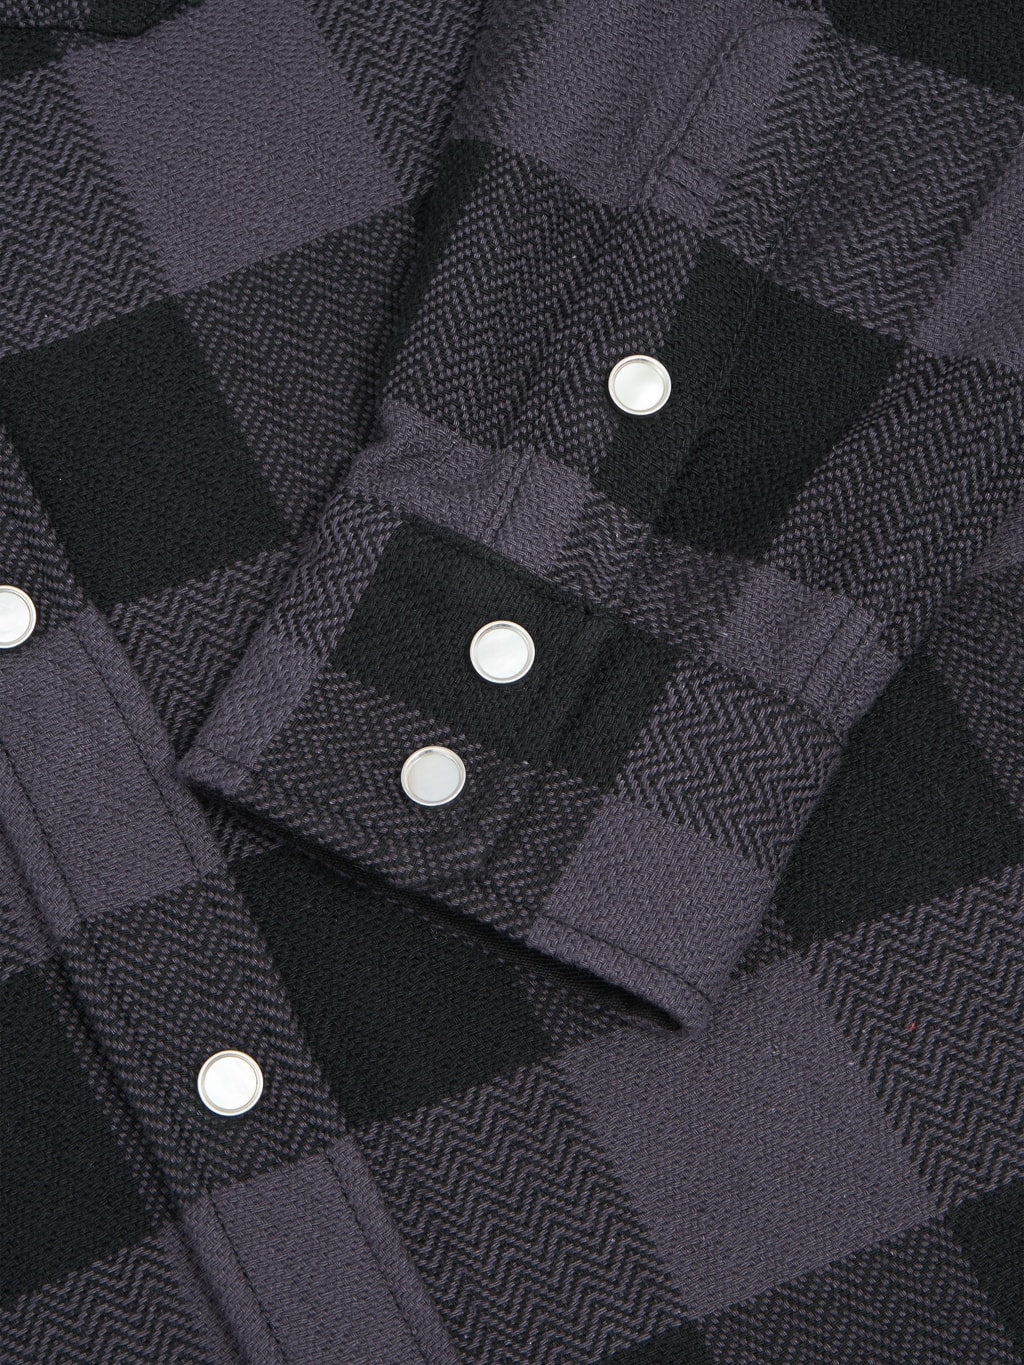 The Flat Head Block Check Flannel Western Shirt Grey/Black